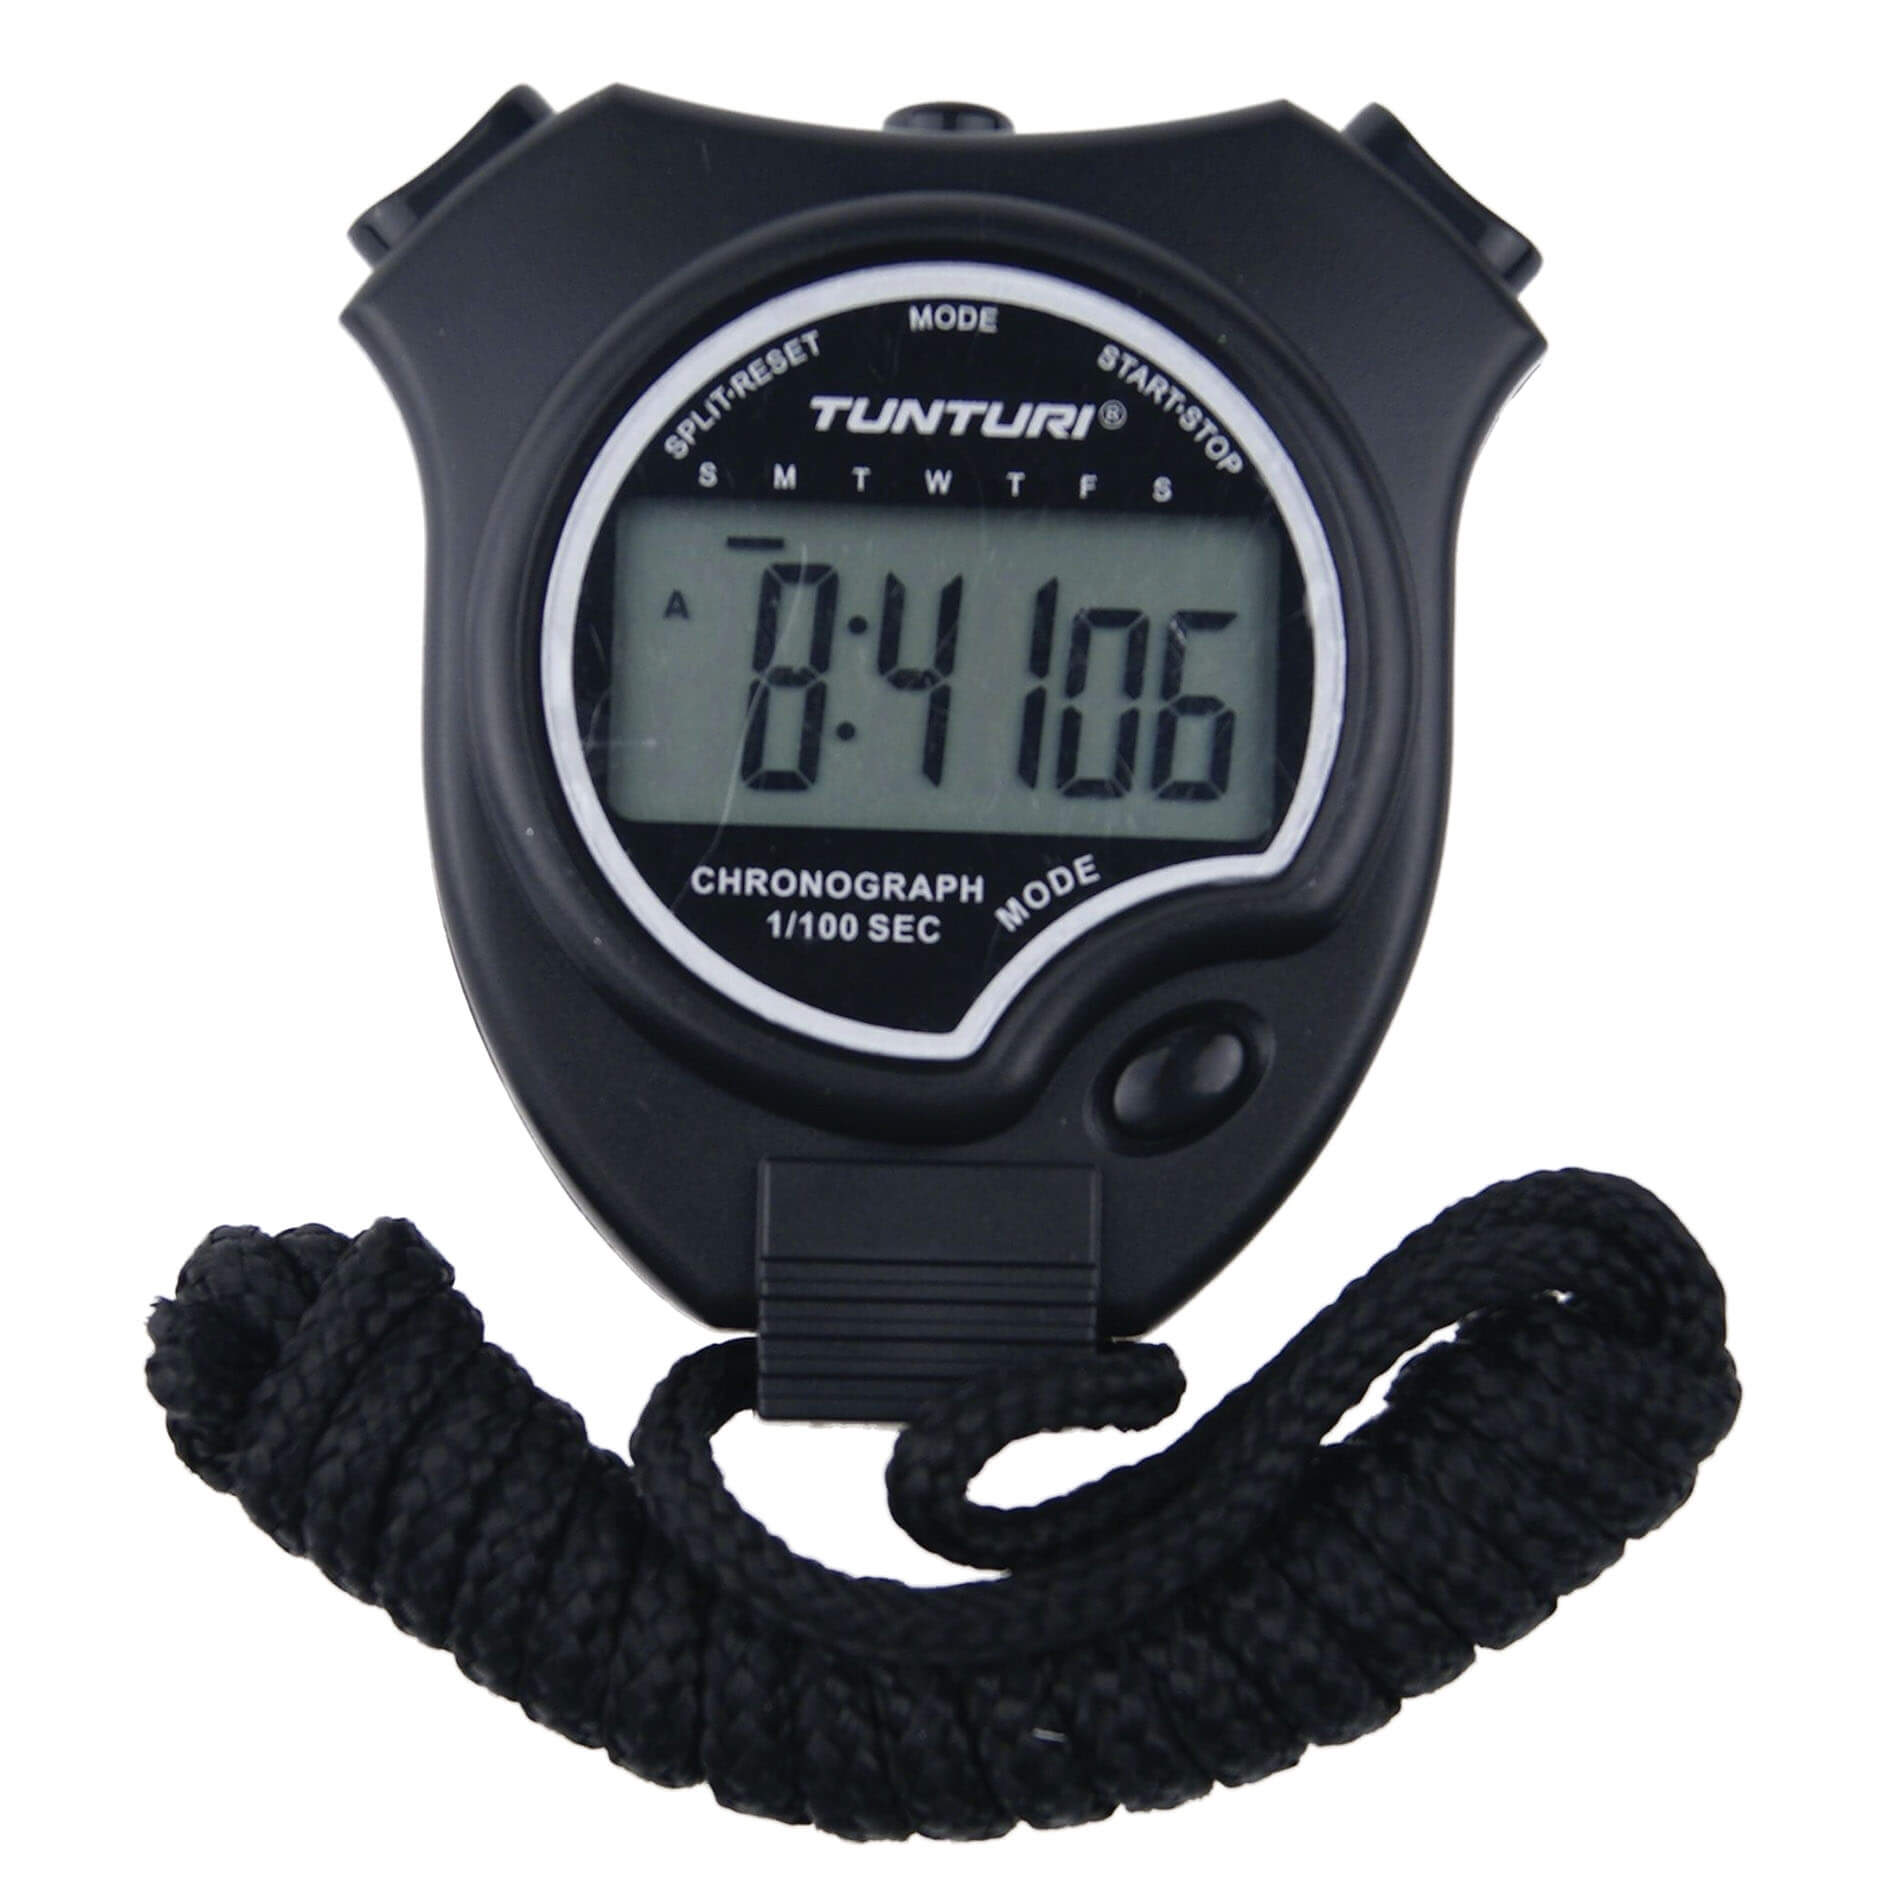 Basis - Stopwatch - Digitale Stopwatch - Sport stopwatch - Grote Display - Zwart